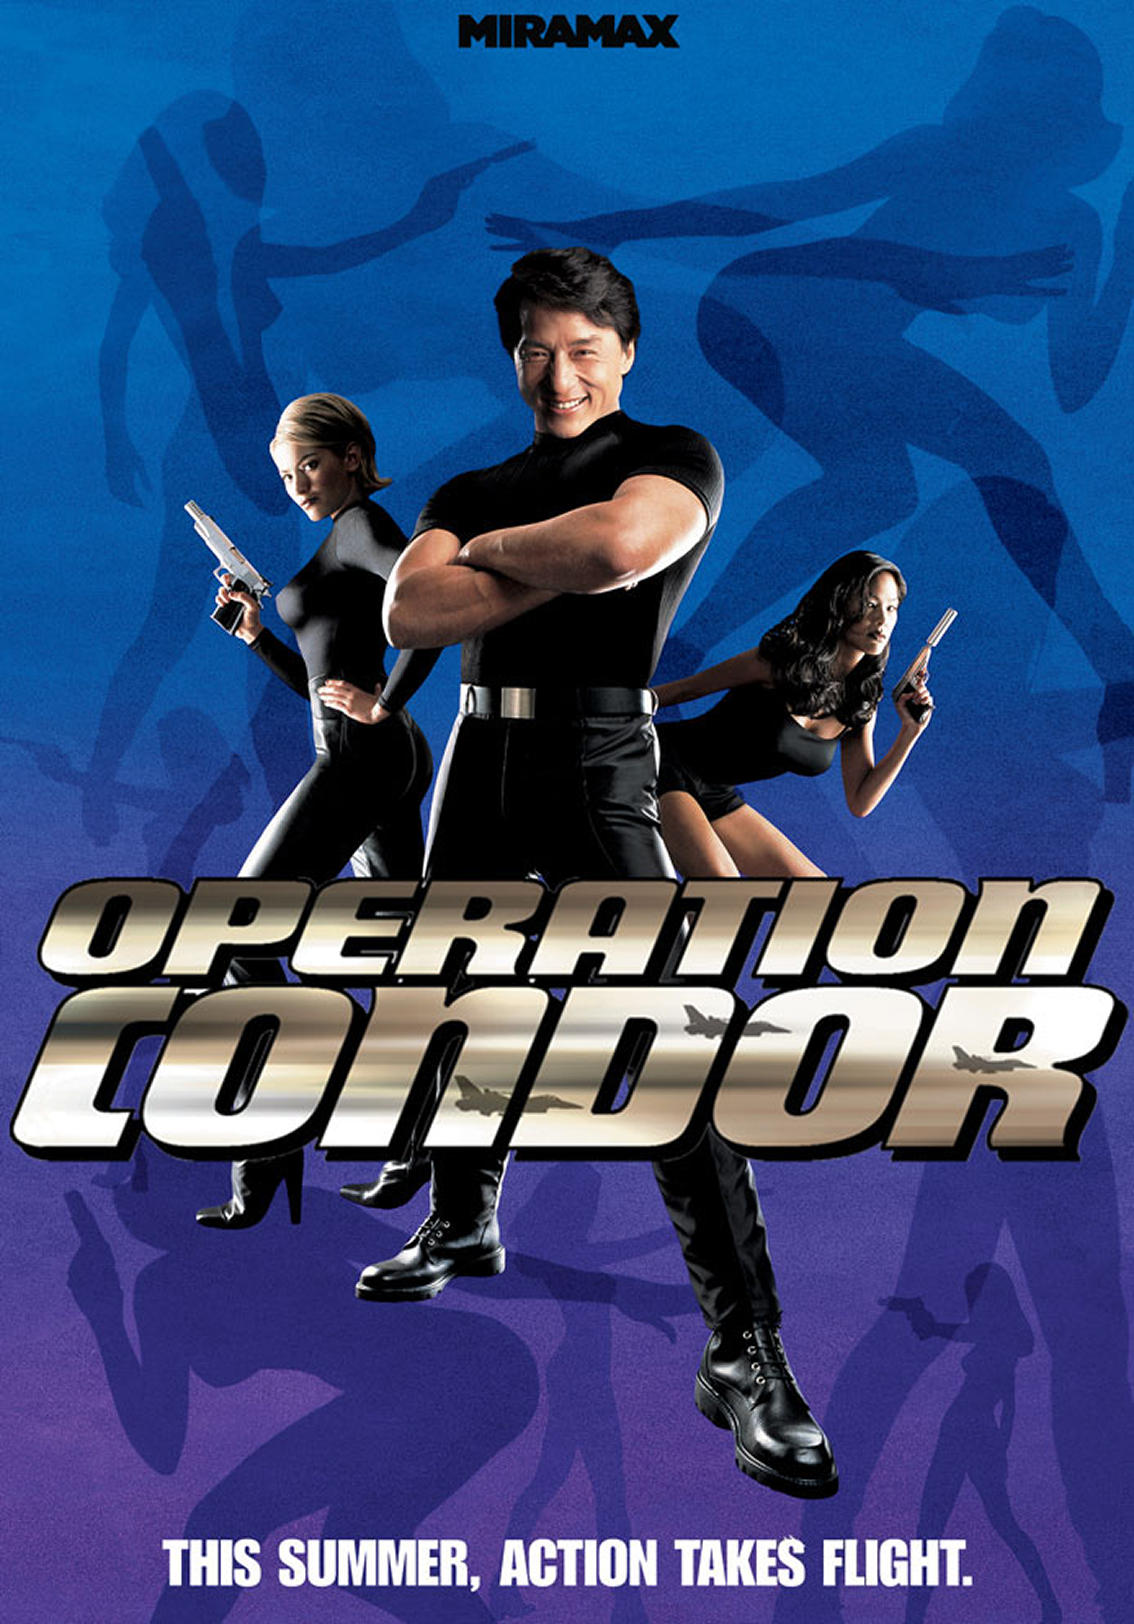 operation condor movie